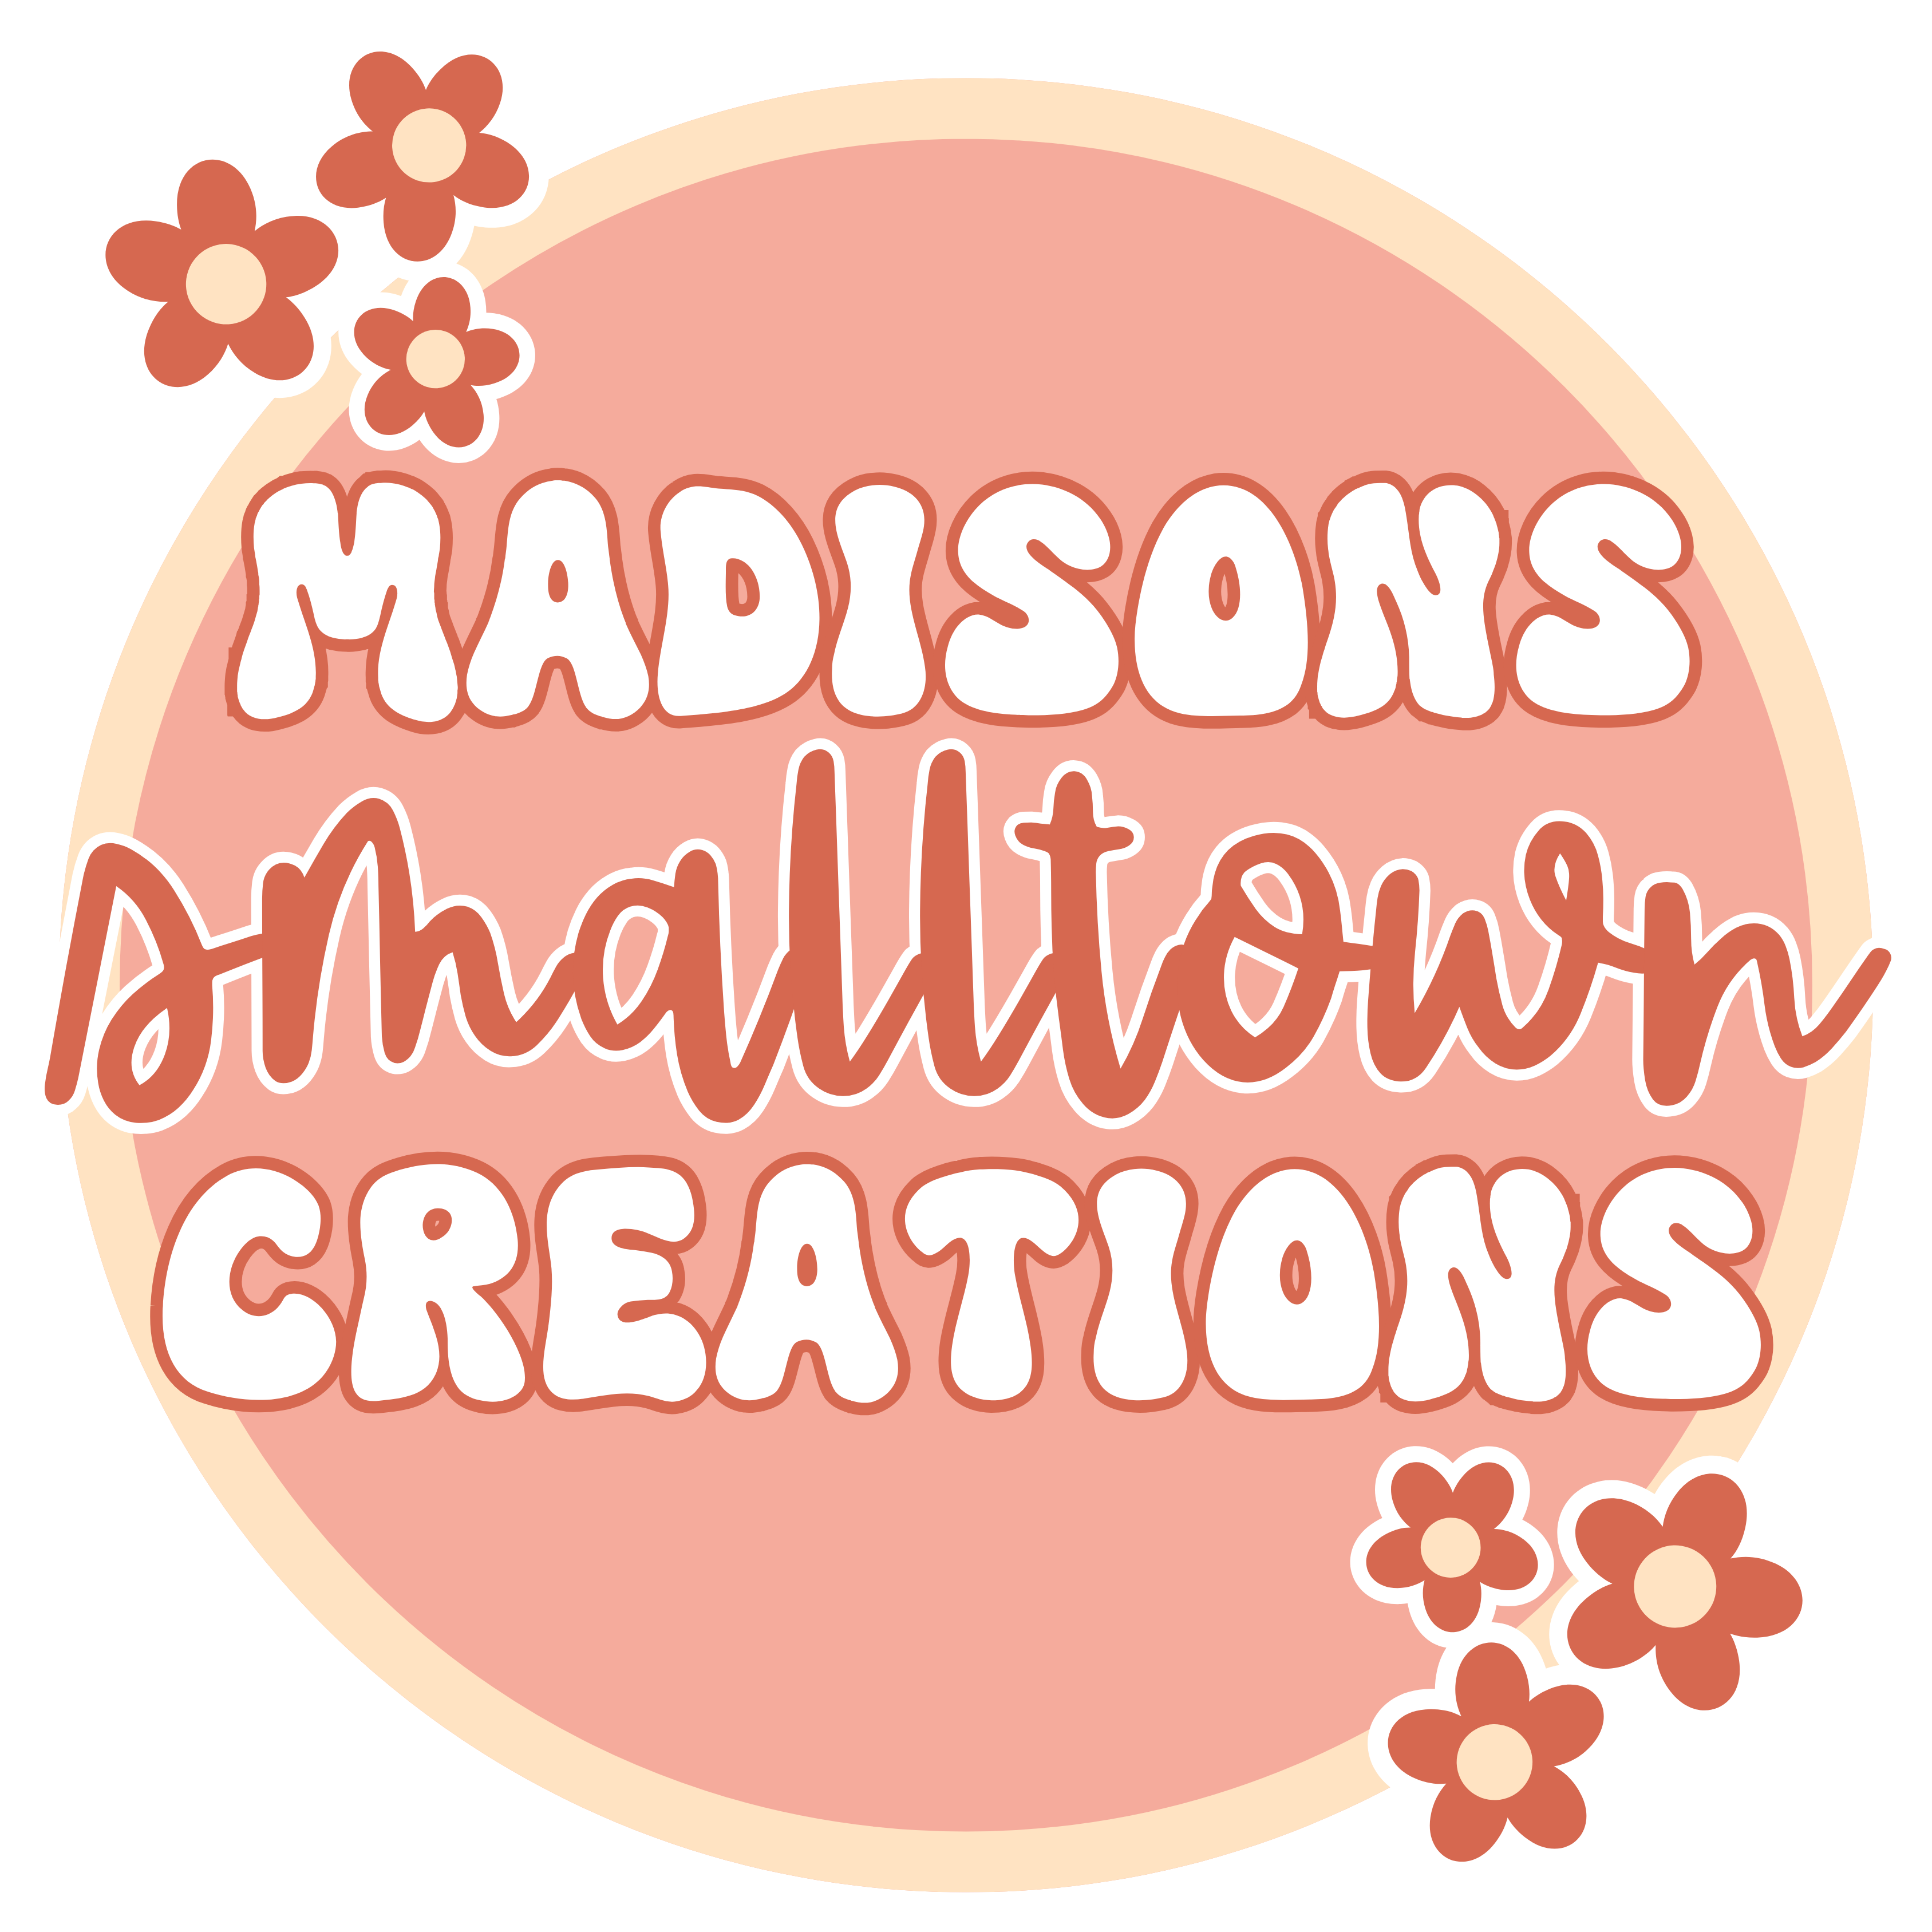 Madison’s Smalltown Creations